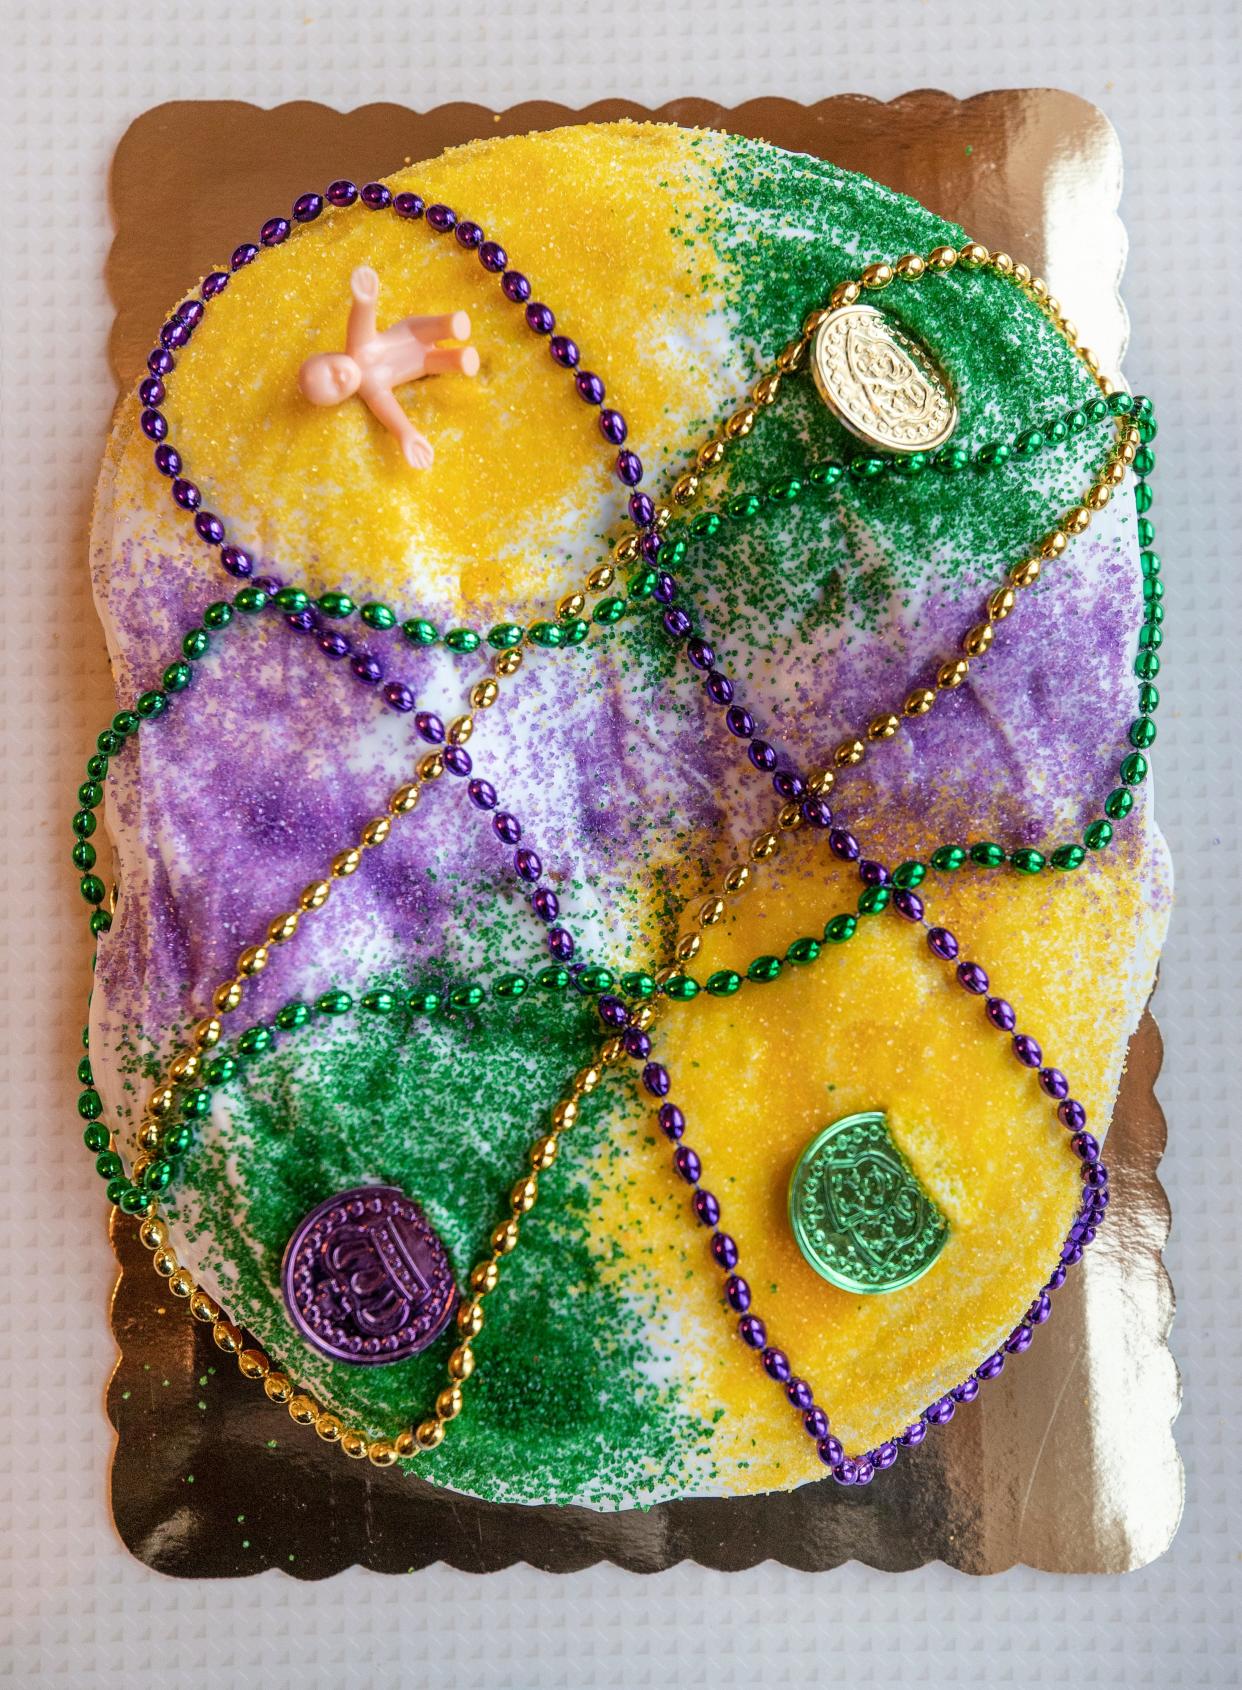 Nord's Bakery's king cake, for the Mardi Gras season. Jan. 29, 2021